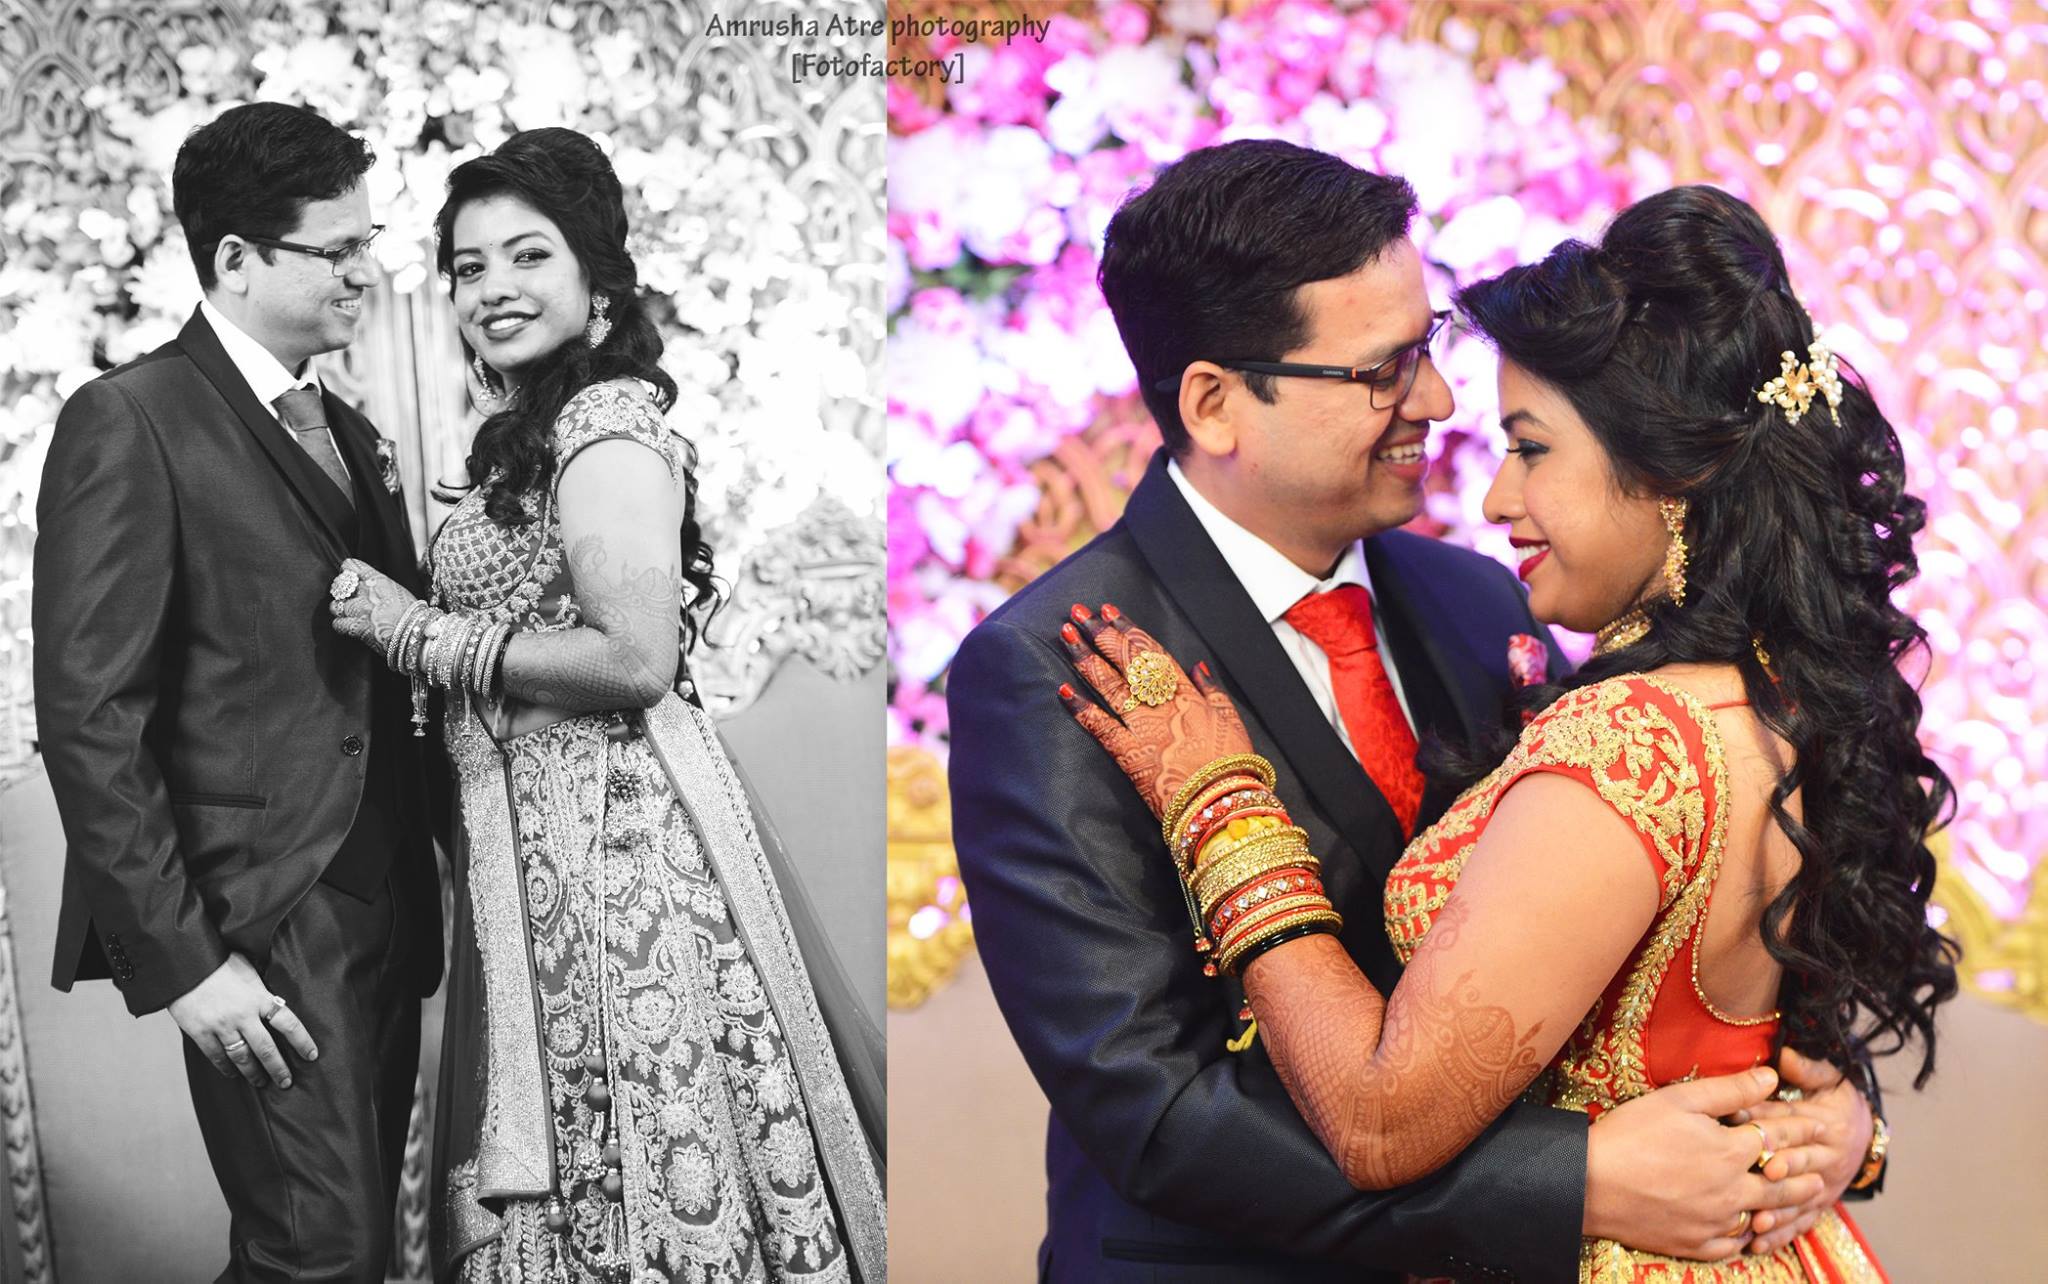 Fotofactory Wedding Photographer, Mumbai